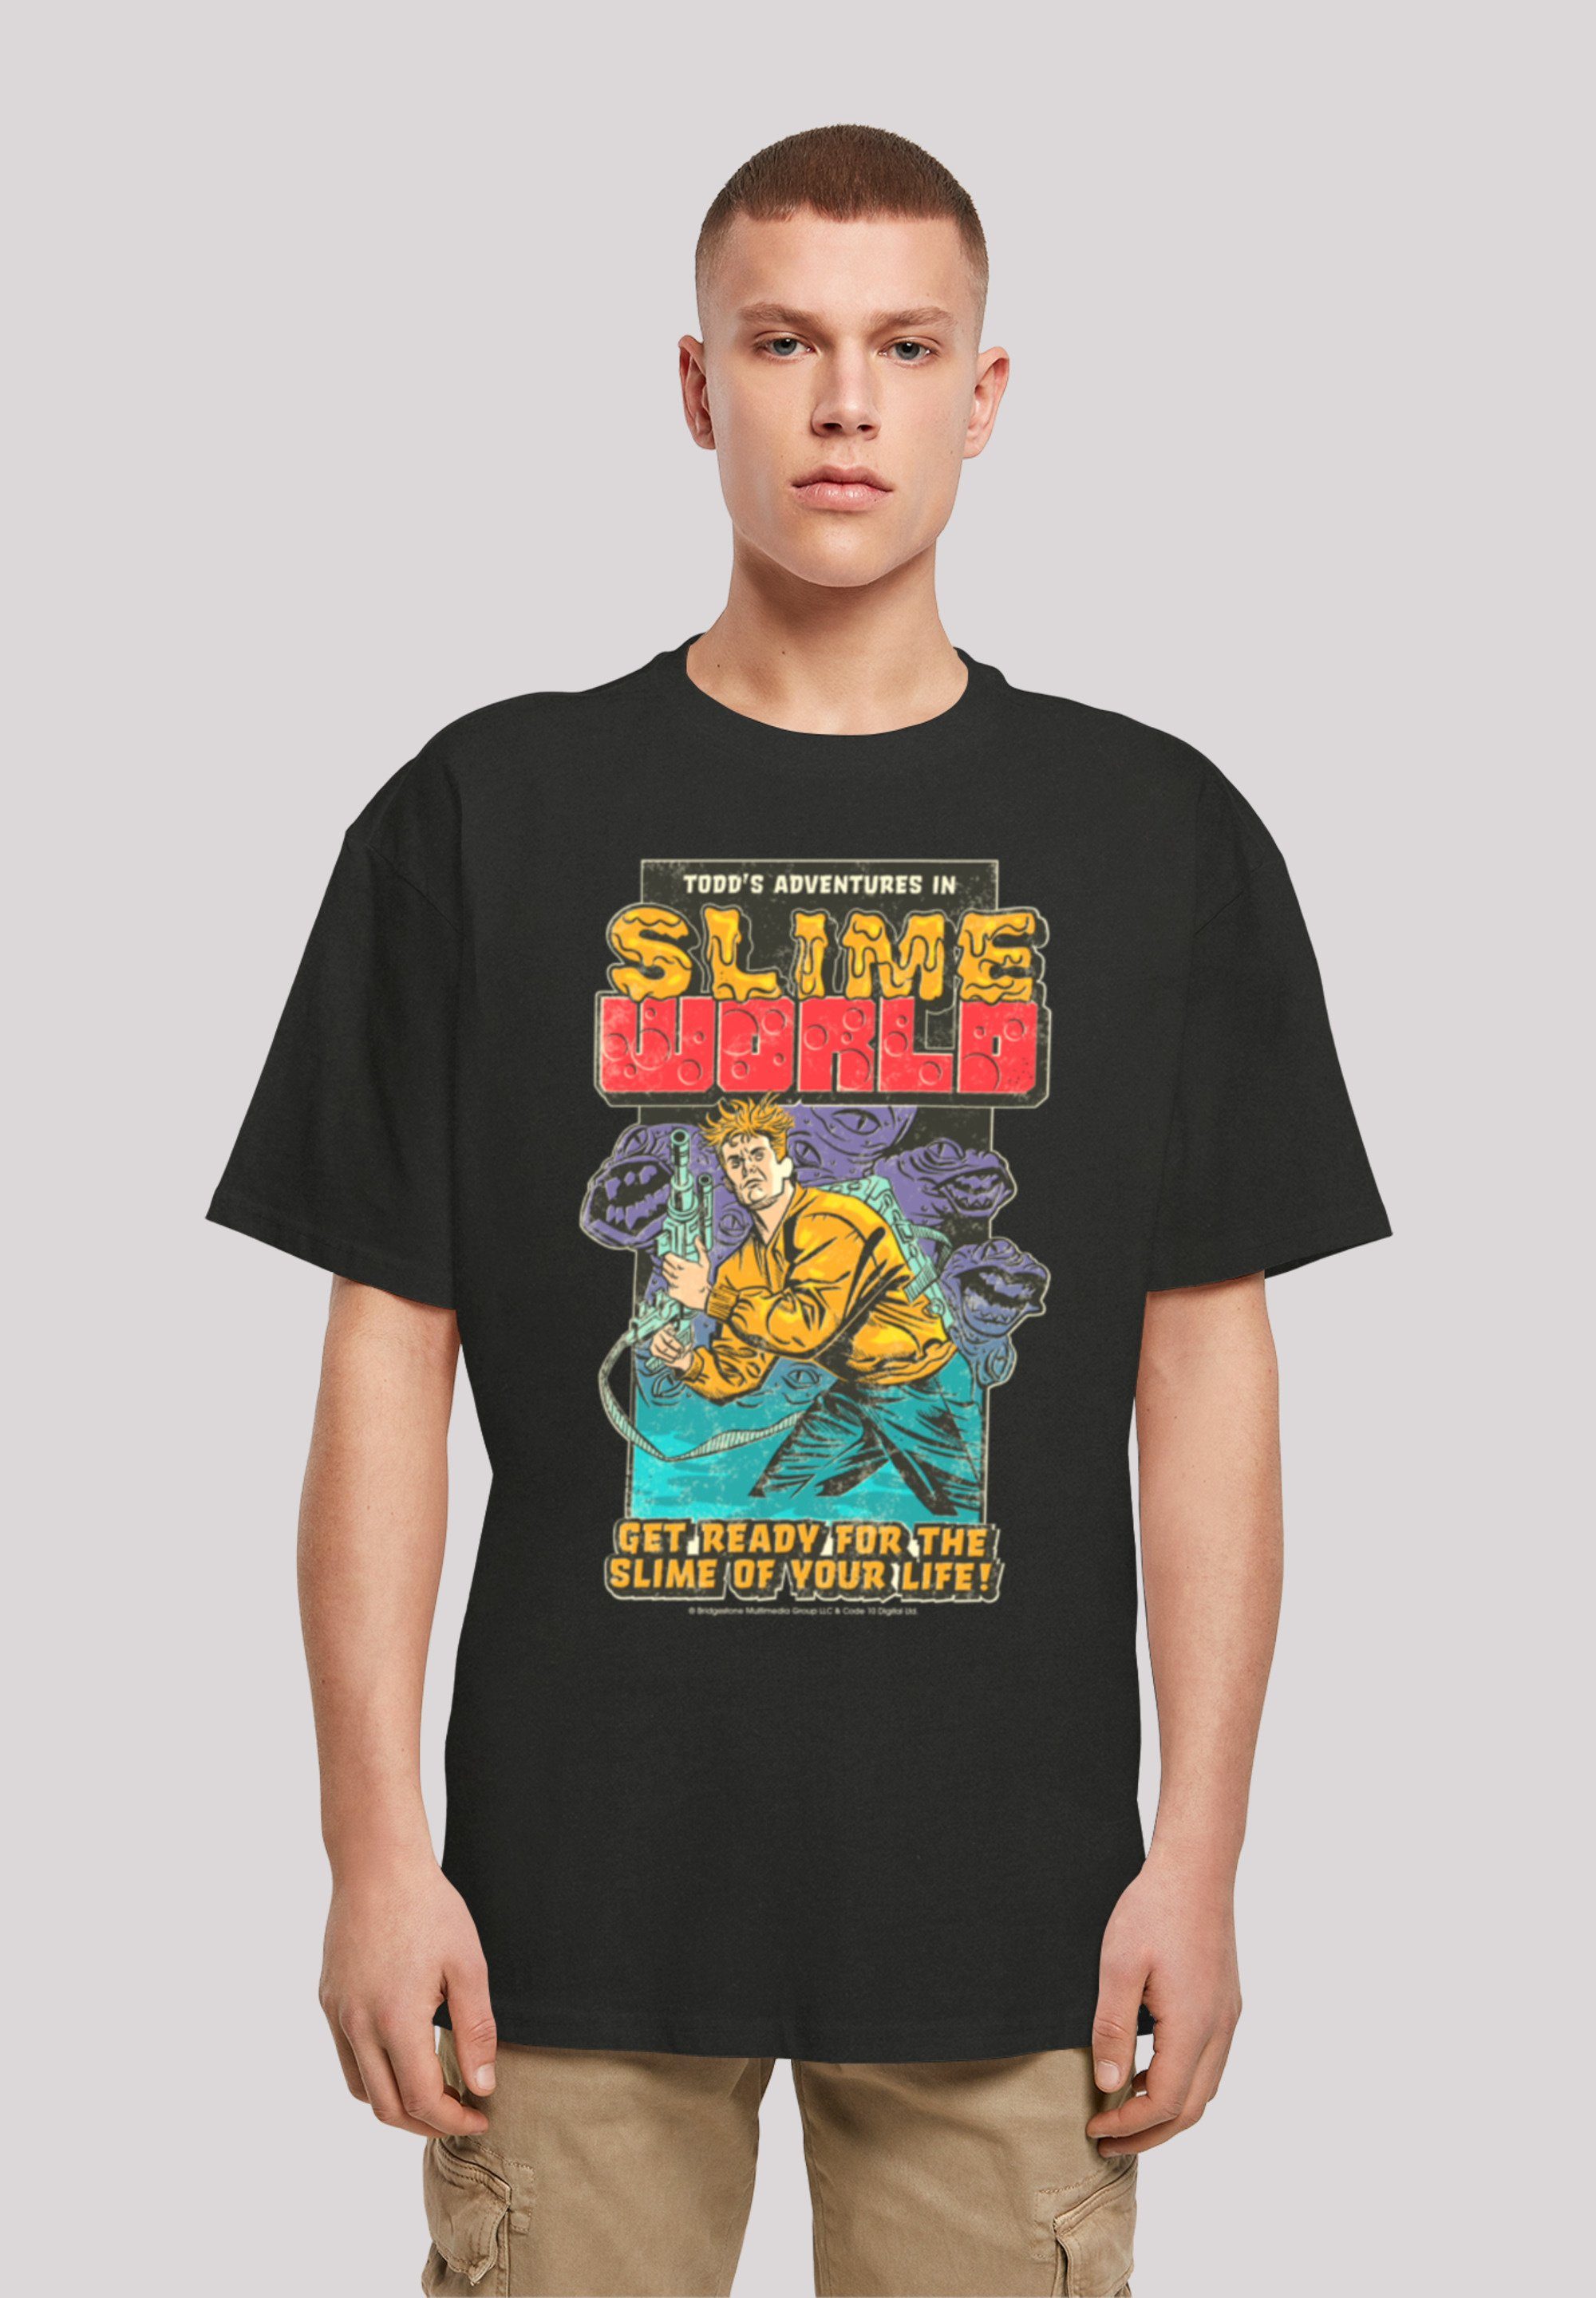 F4NT4STIC T-Shirt Retro Gaming Todd's schwarz SlimeWorld Print In Adventures